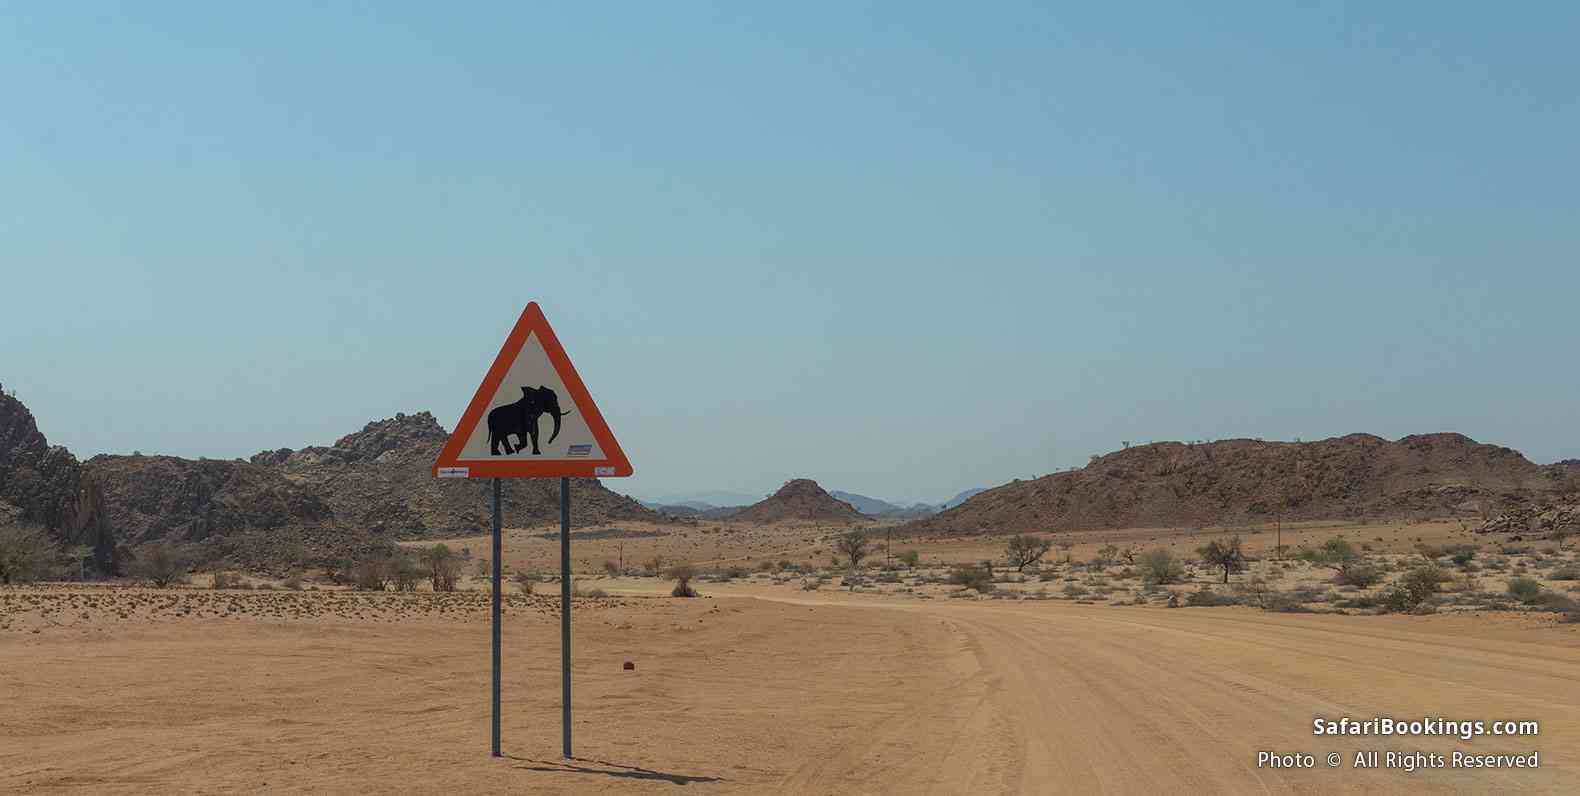 Crossing elephants warning sign